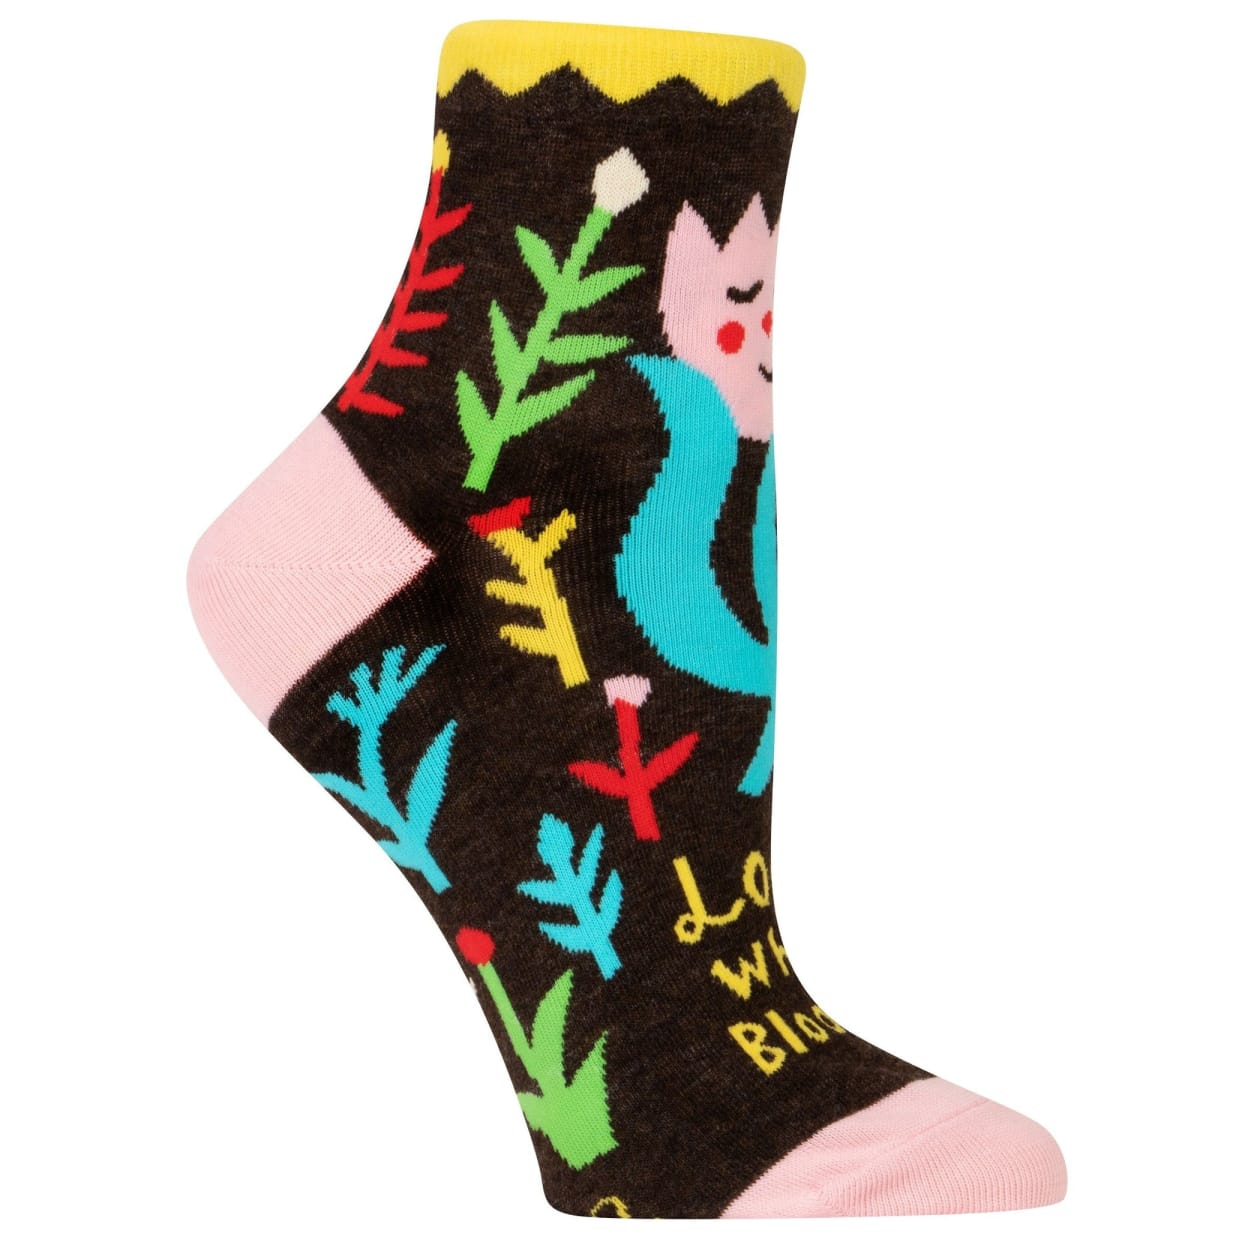 Look Who's Blooming Women's Ankle Socks | BlueQ at GetBullish